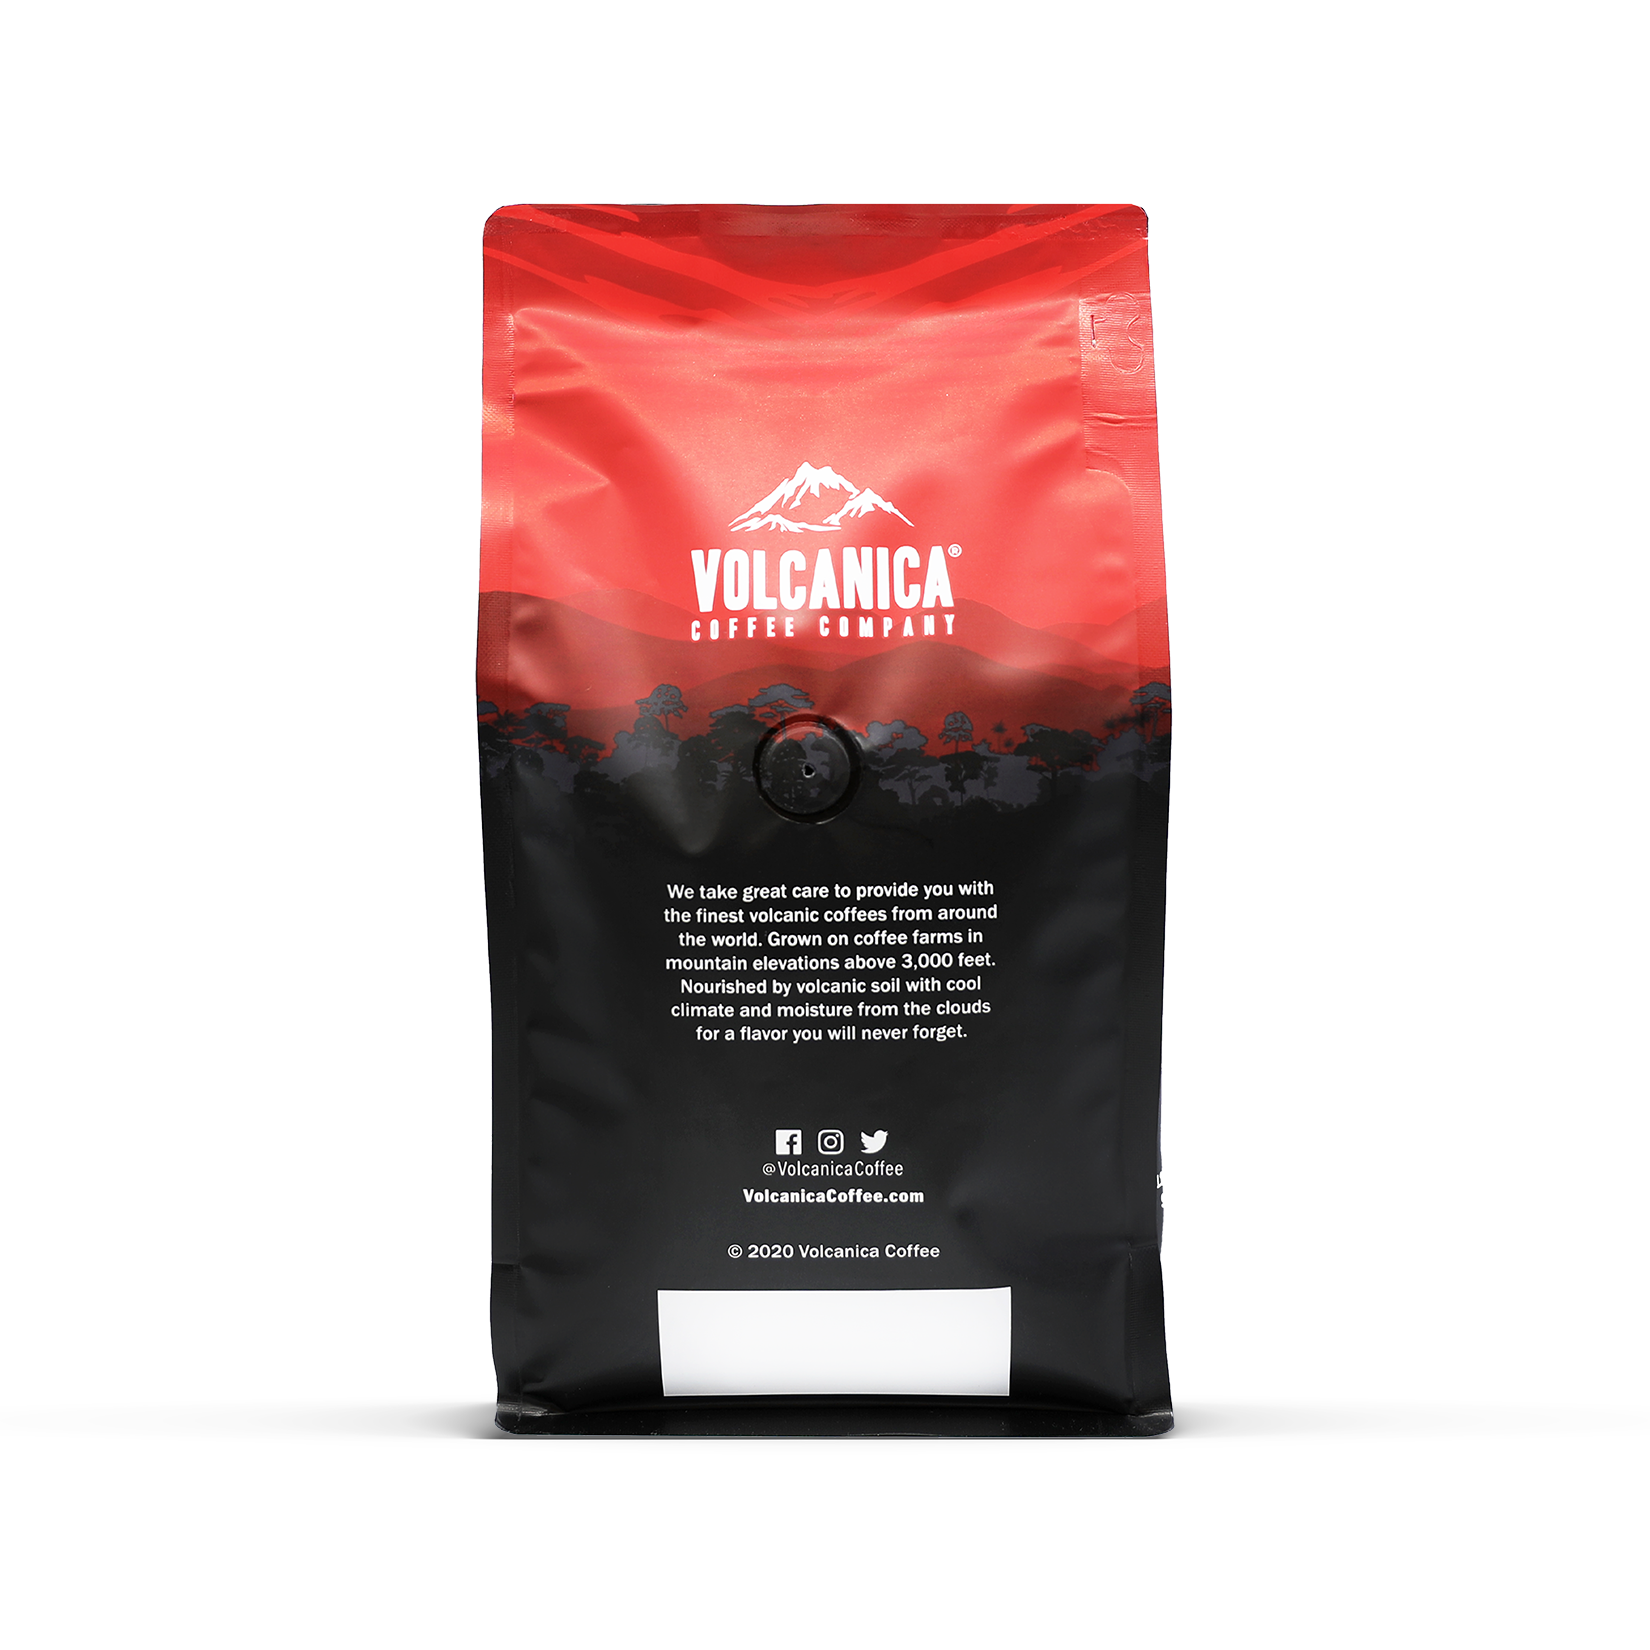 Cinnalicious Flavored Coffee - Cinnamon Flavored Coffee - Volcanica Coffee